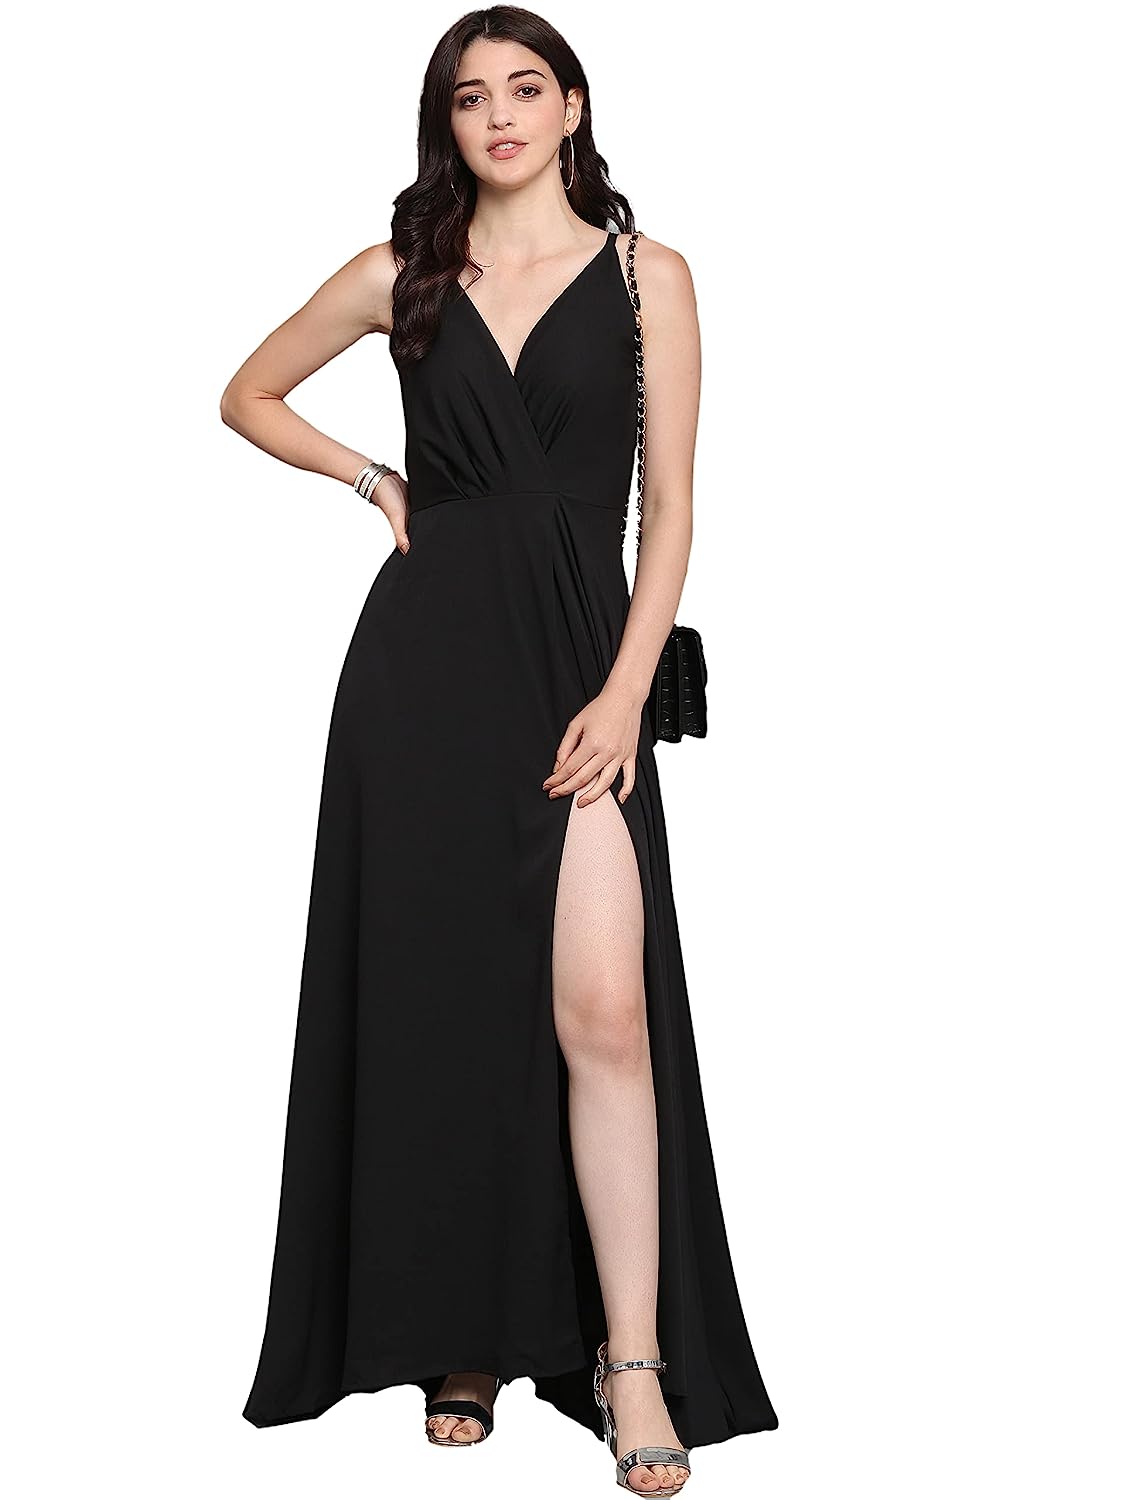 Sheetal Associates Women's Sleeveless V-Neck Fit & Flare Casual Maxi Dress